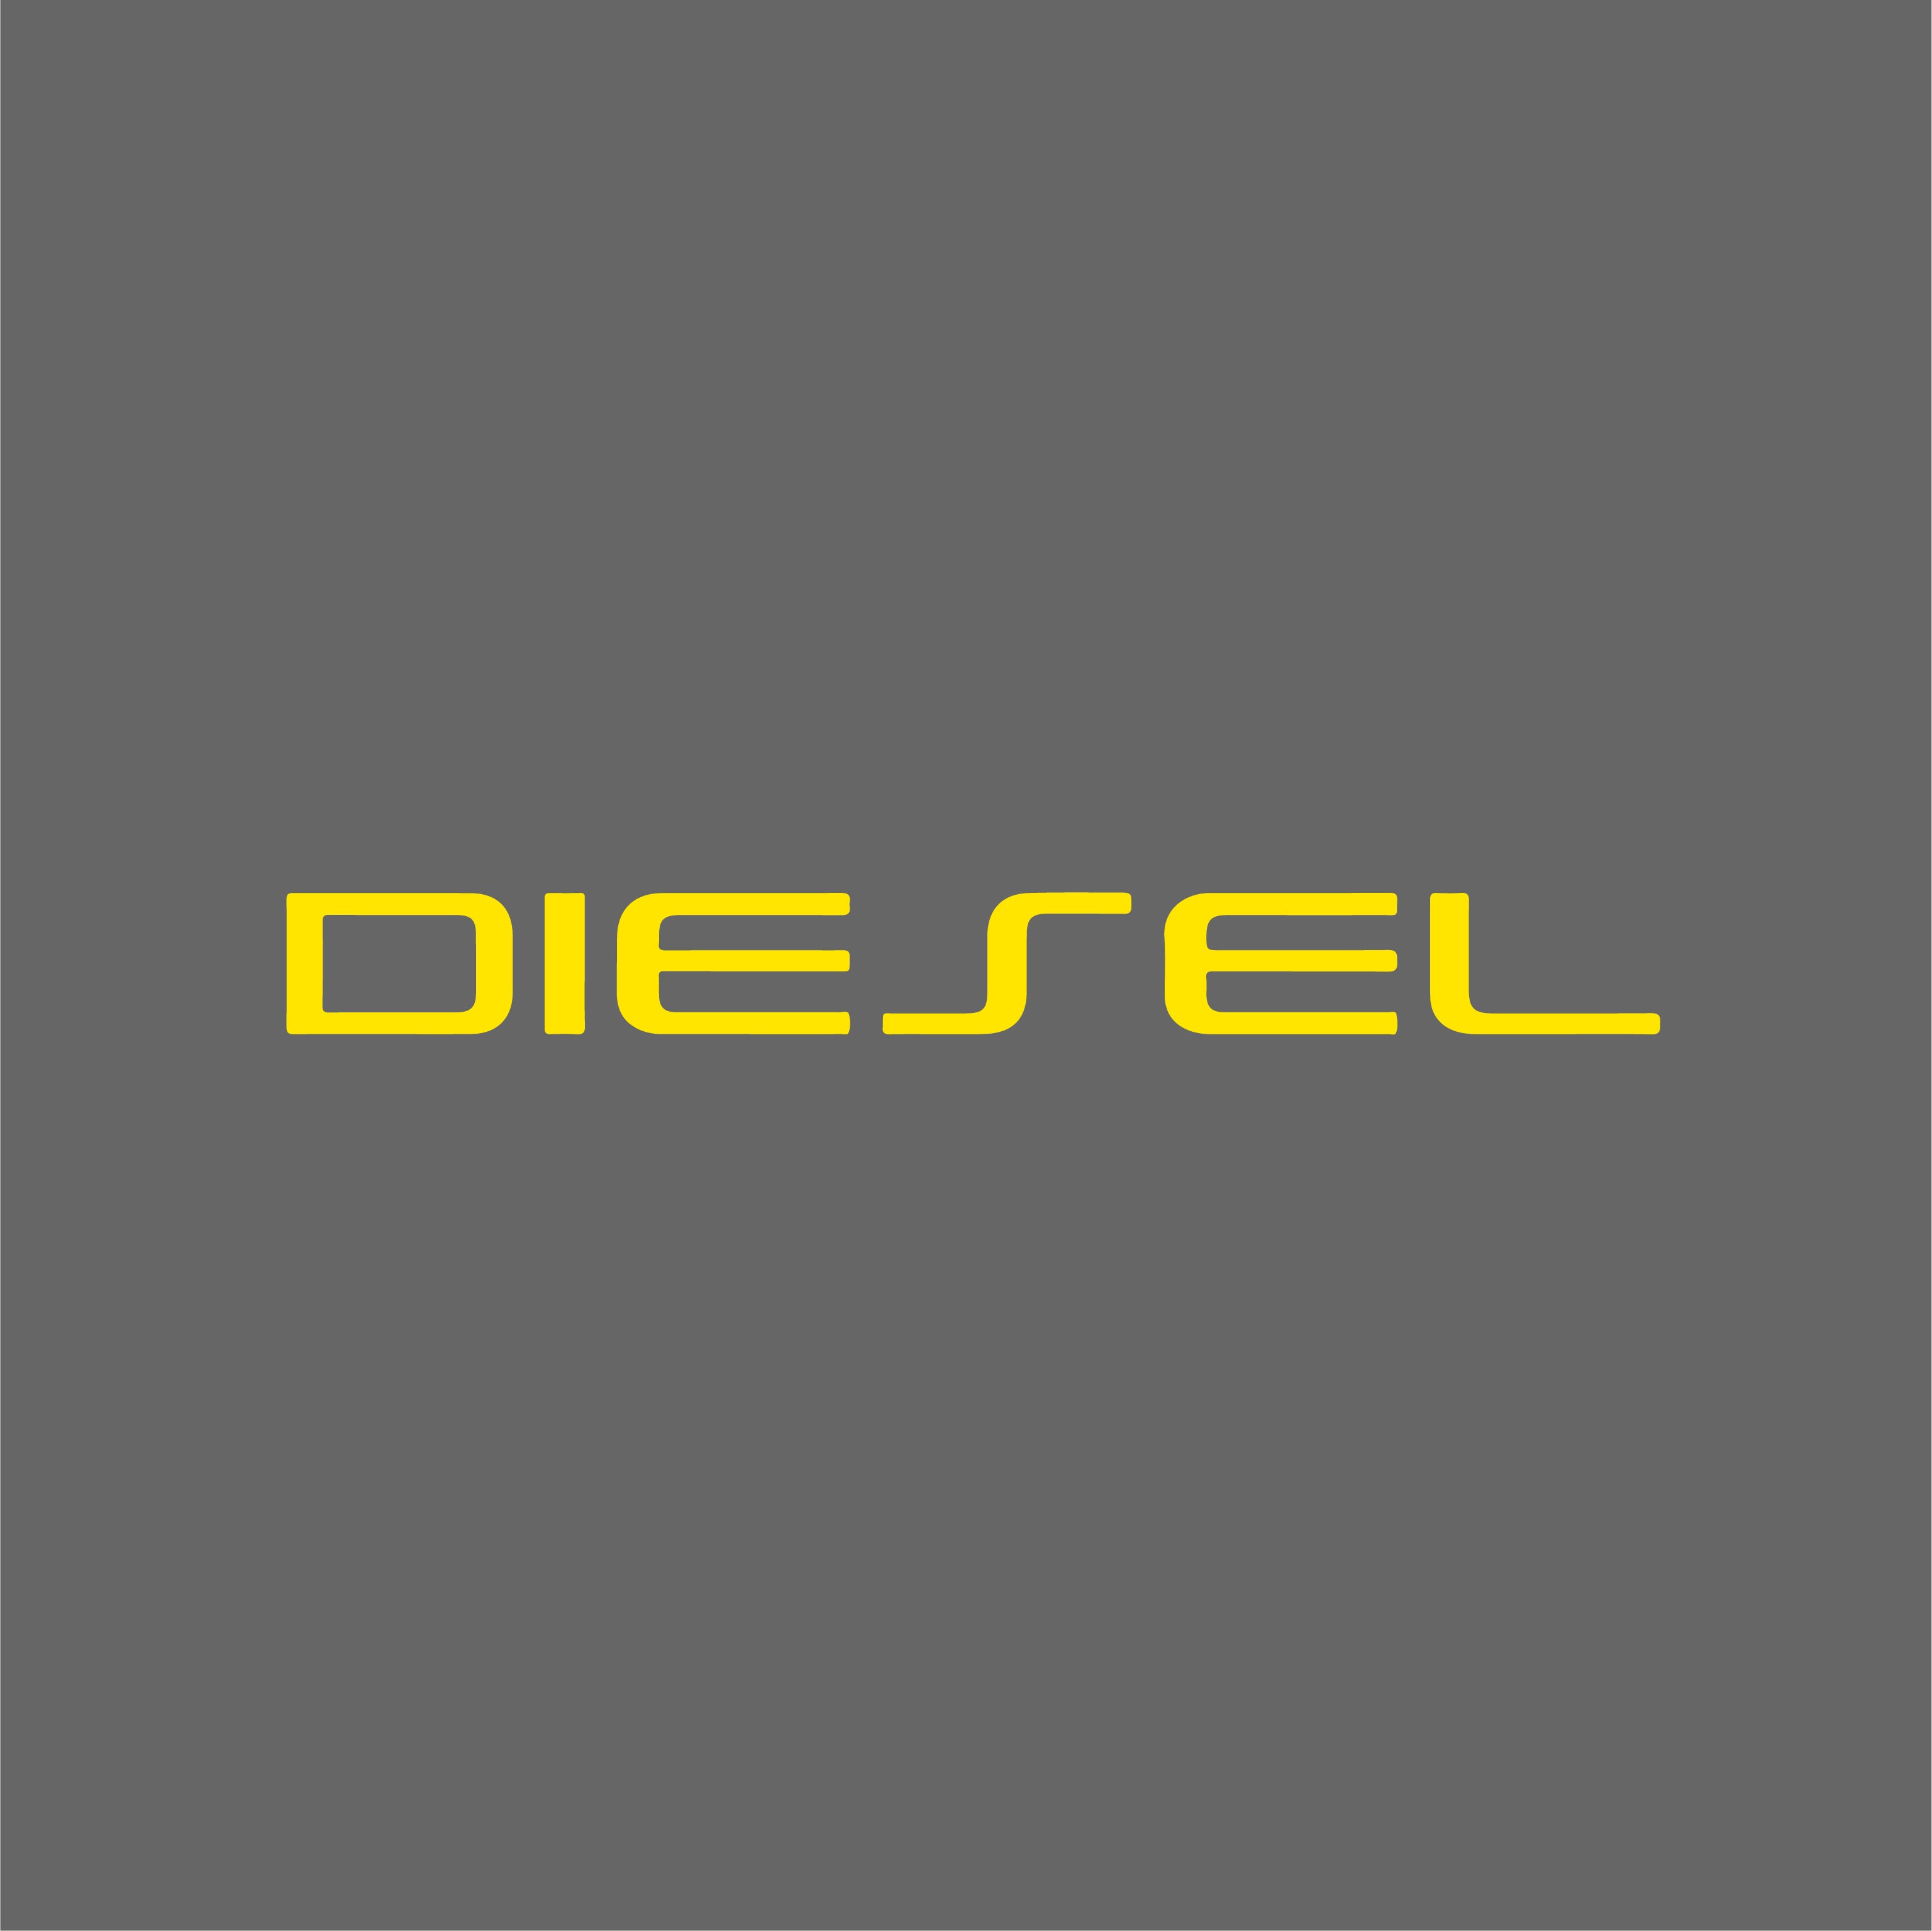 Car Icon Vector Logo Template.Diesel Vector Icon Stock Vector -  Illustration of outline, concept: 158688256